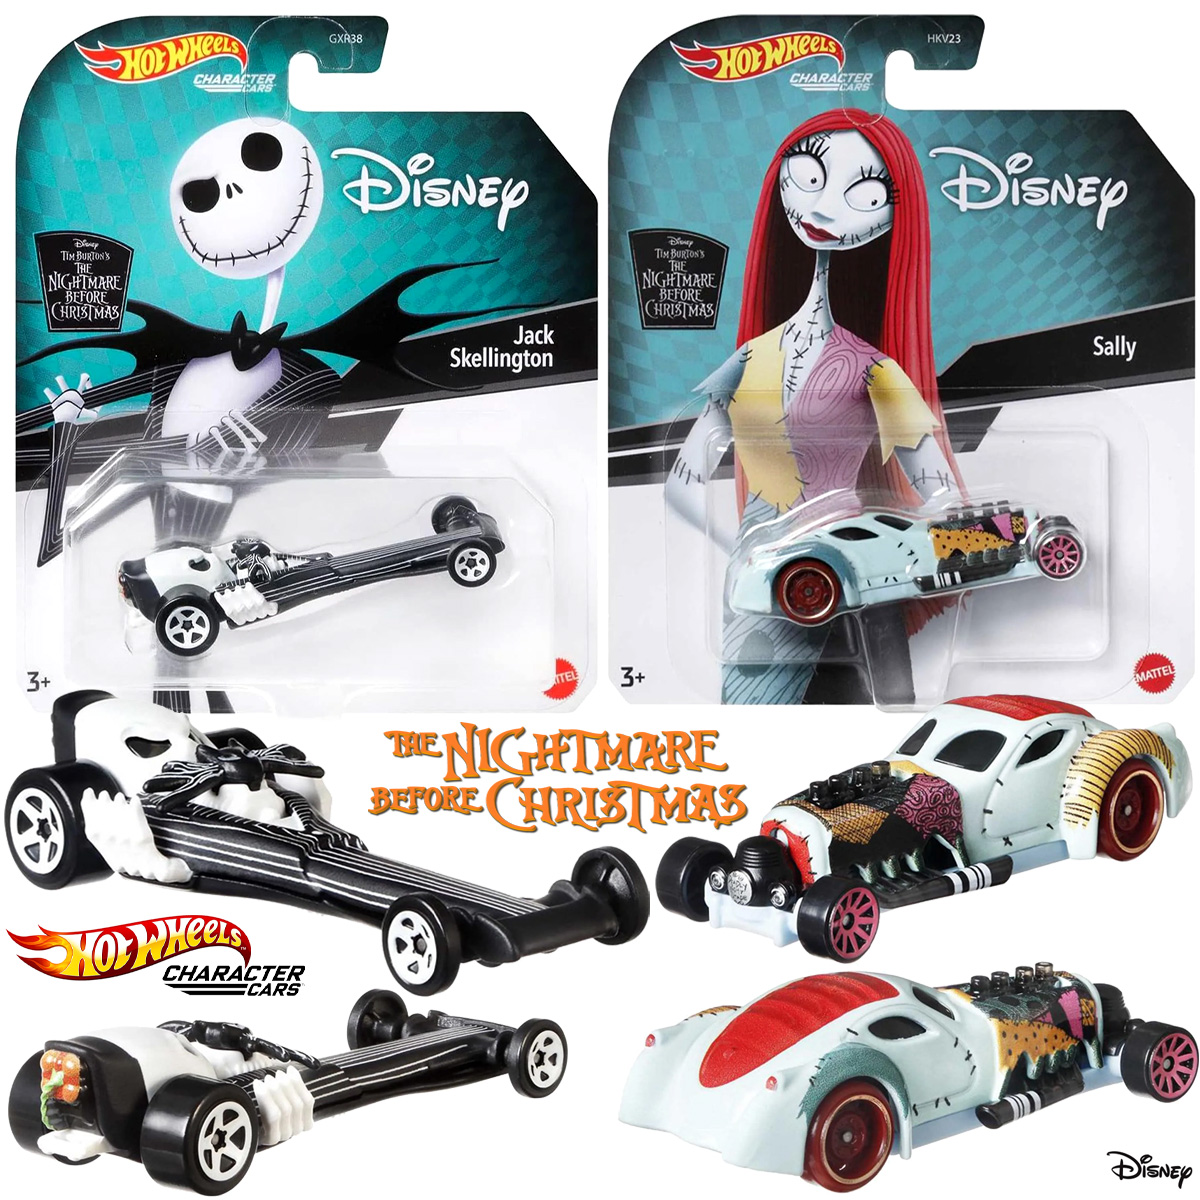 Carrinhos Hot Wheels Character Cars: The Nightmare Before Christmas com Jack e Sally